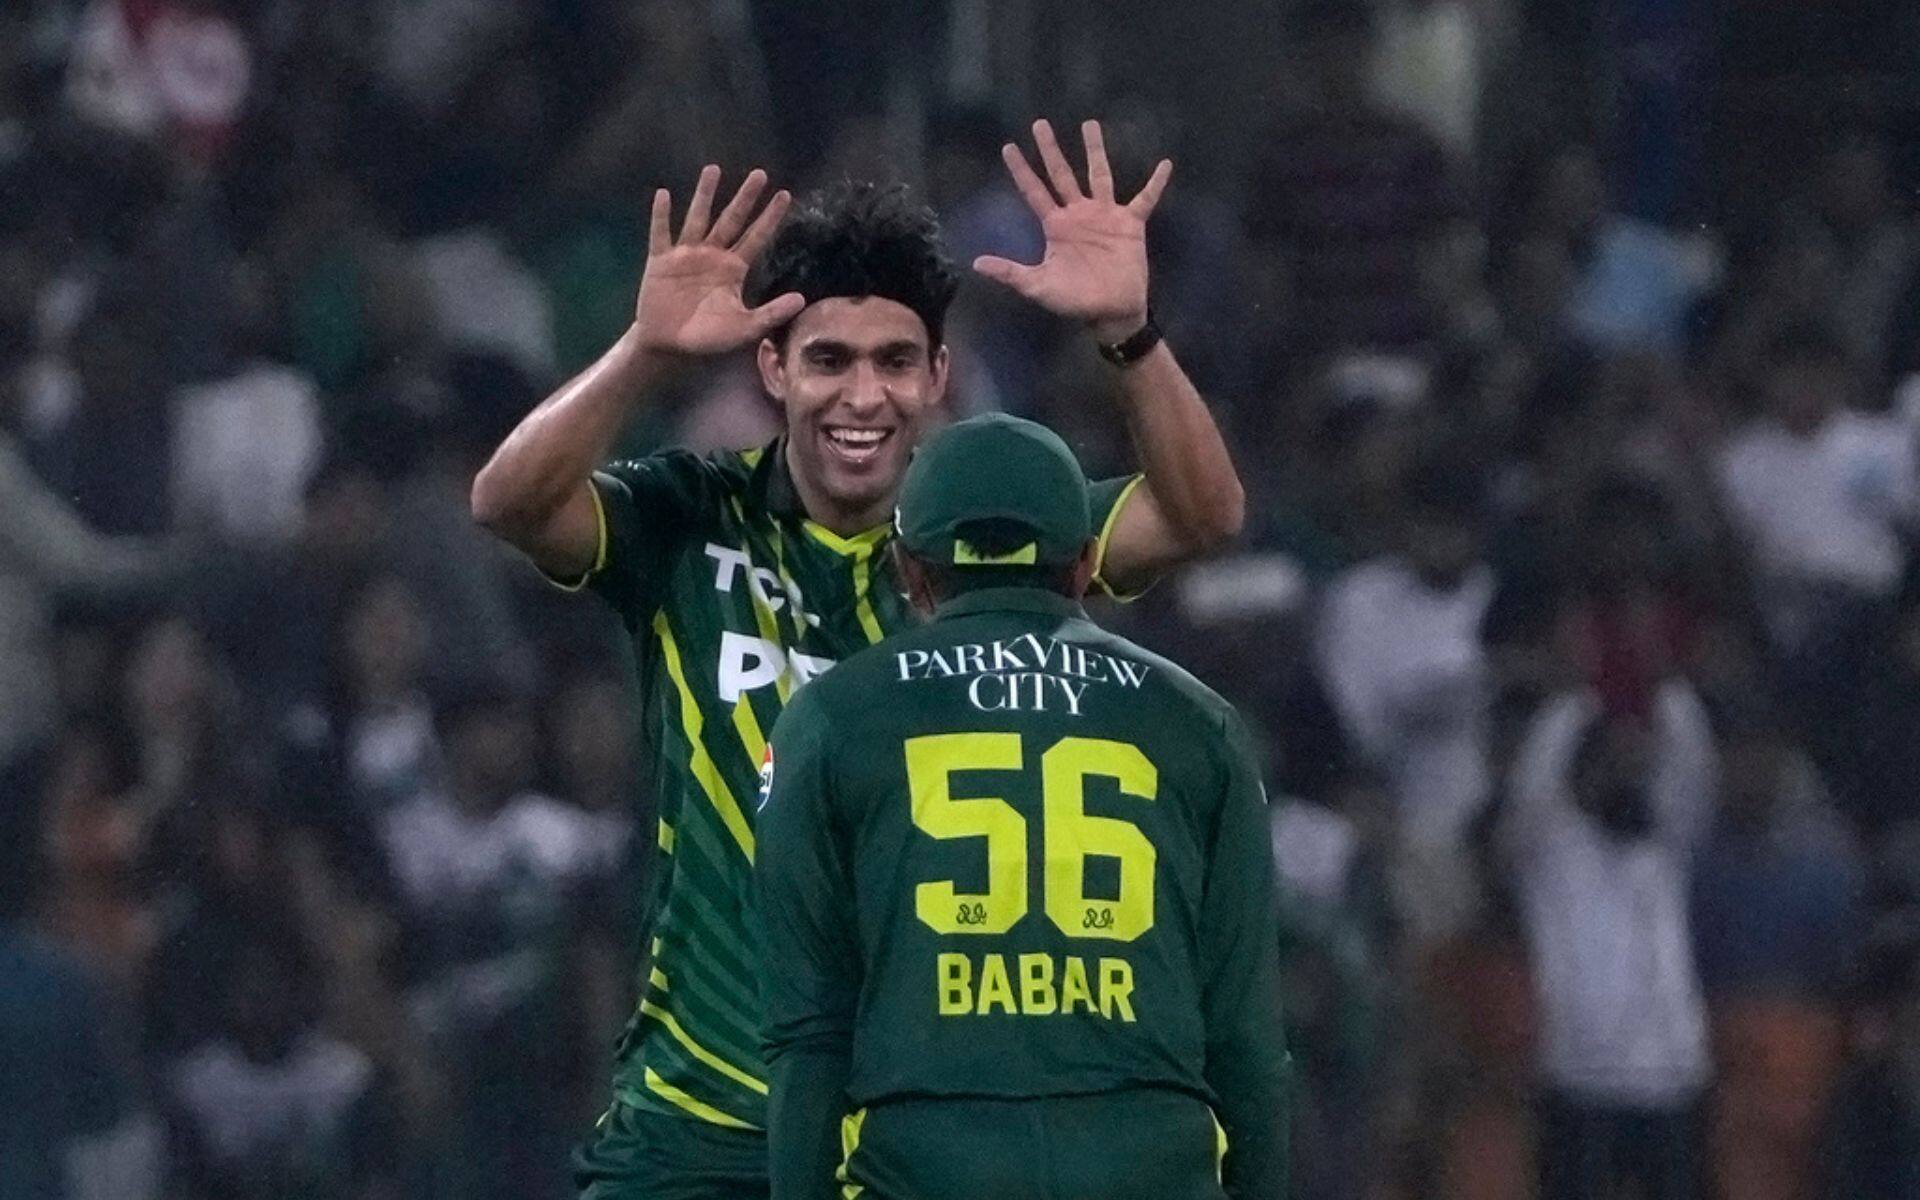 Abbas Afridi celebrating a wicket with Babar Azam (AP Photo)